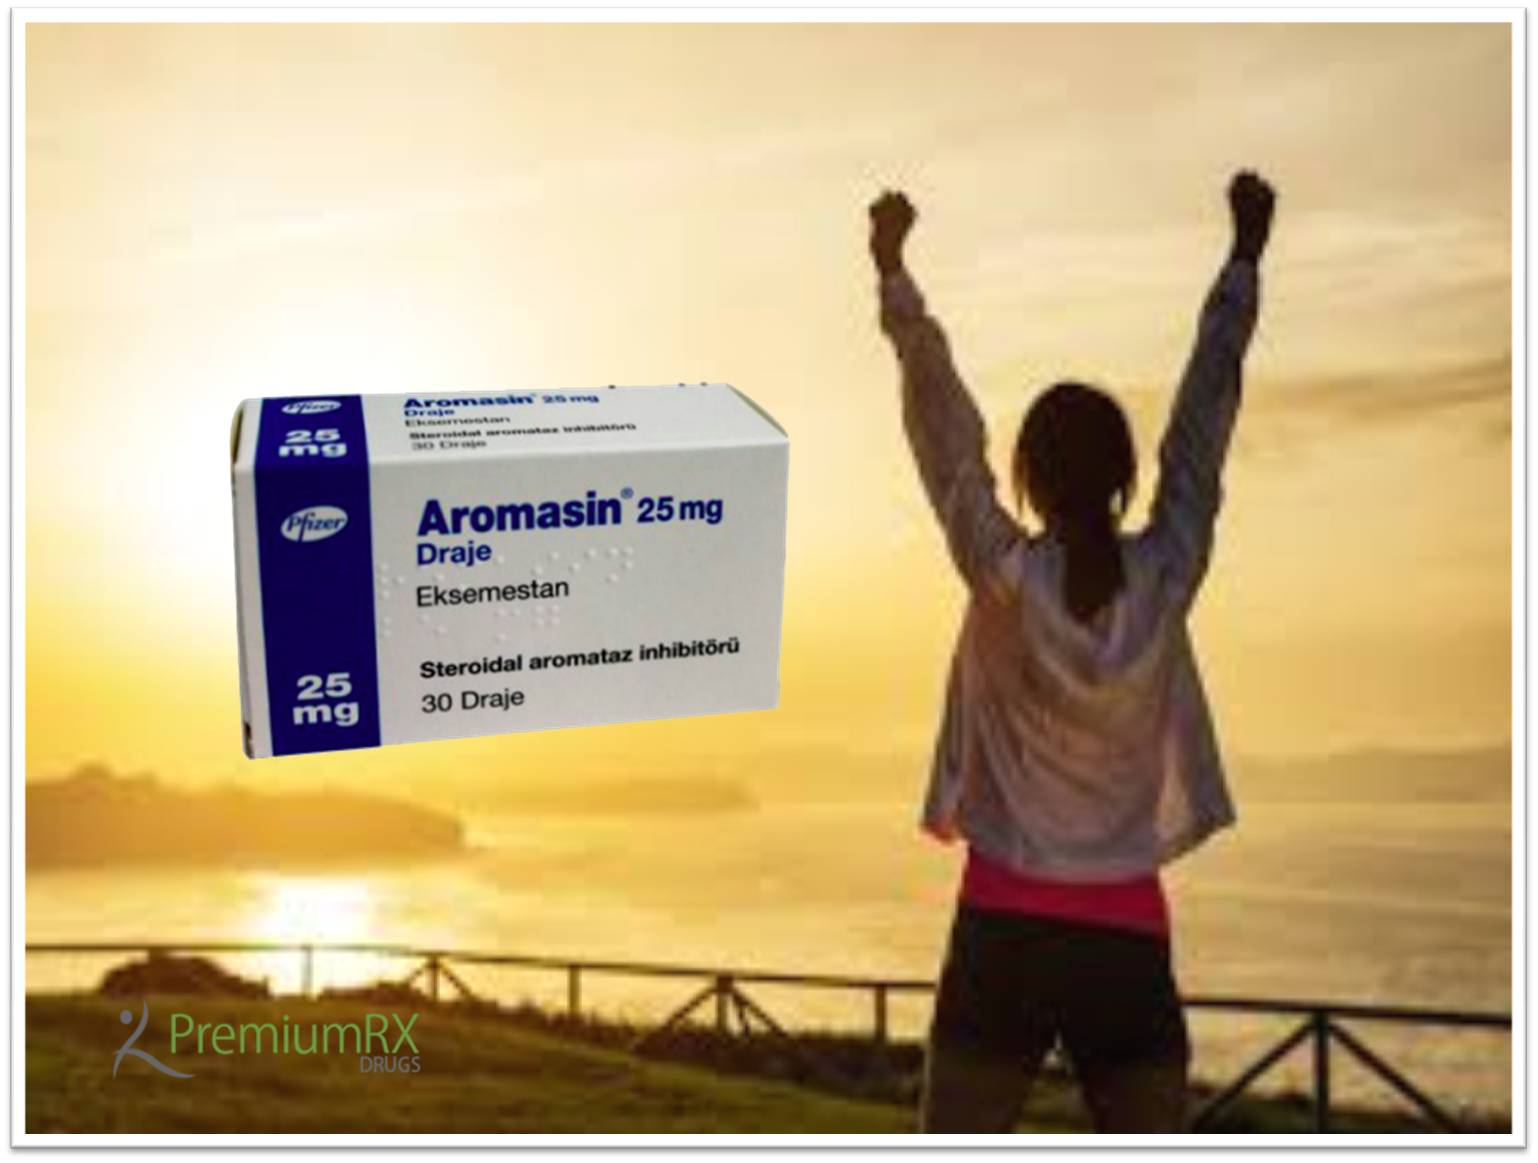 Buy Aromasin 25 mg Medication Online